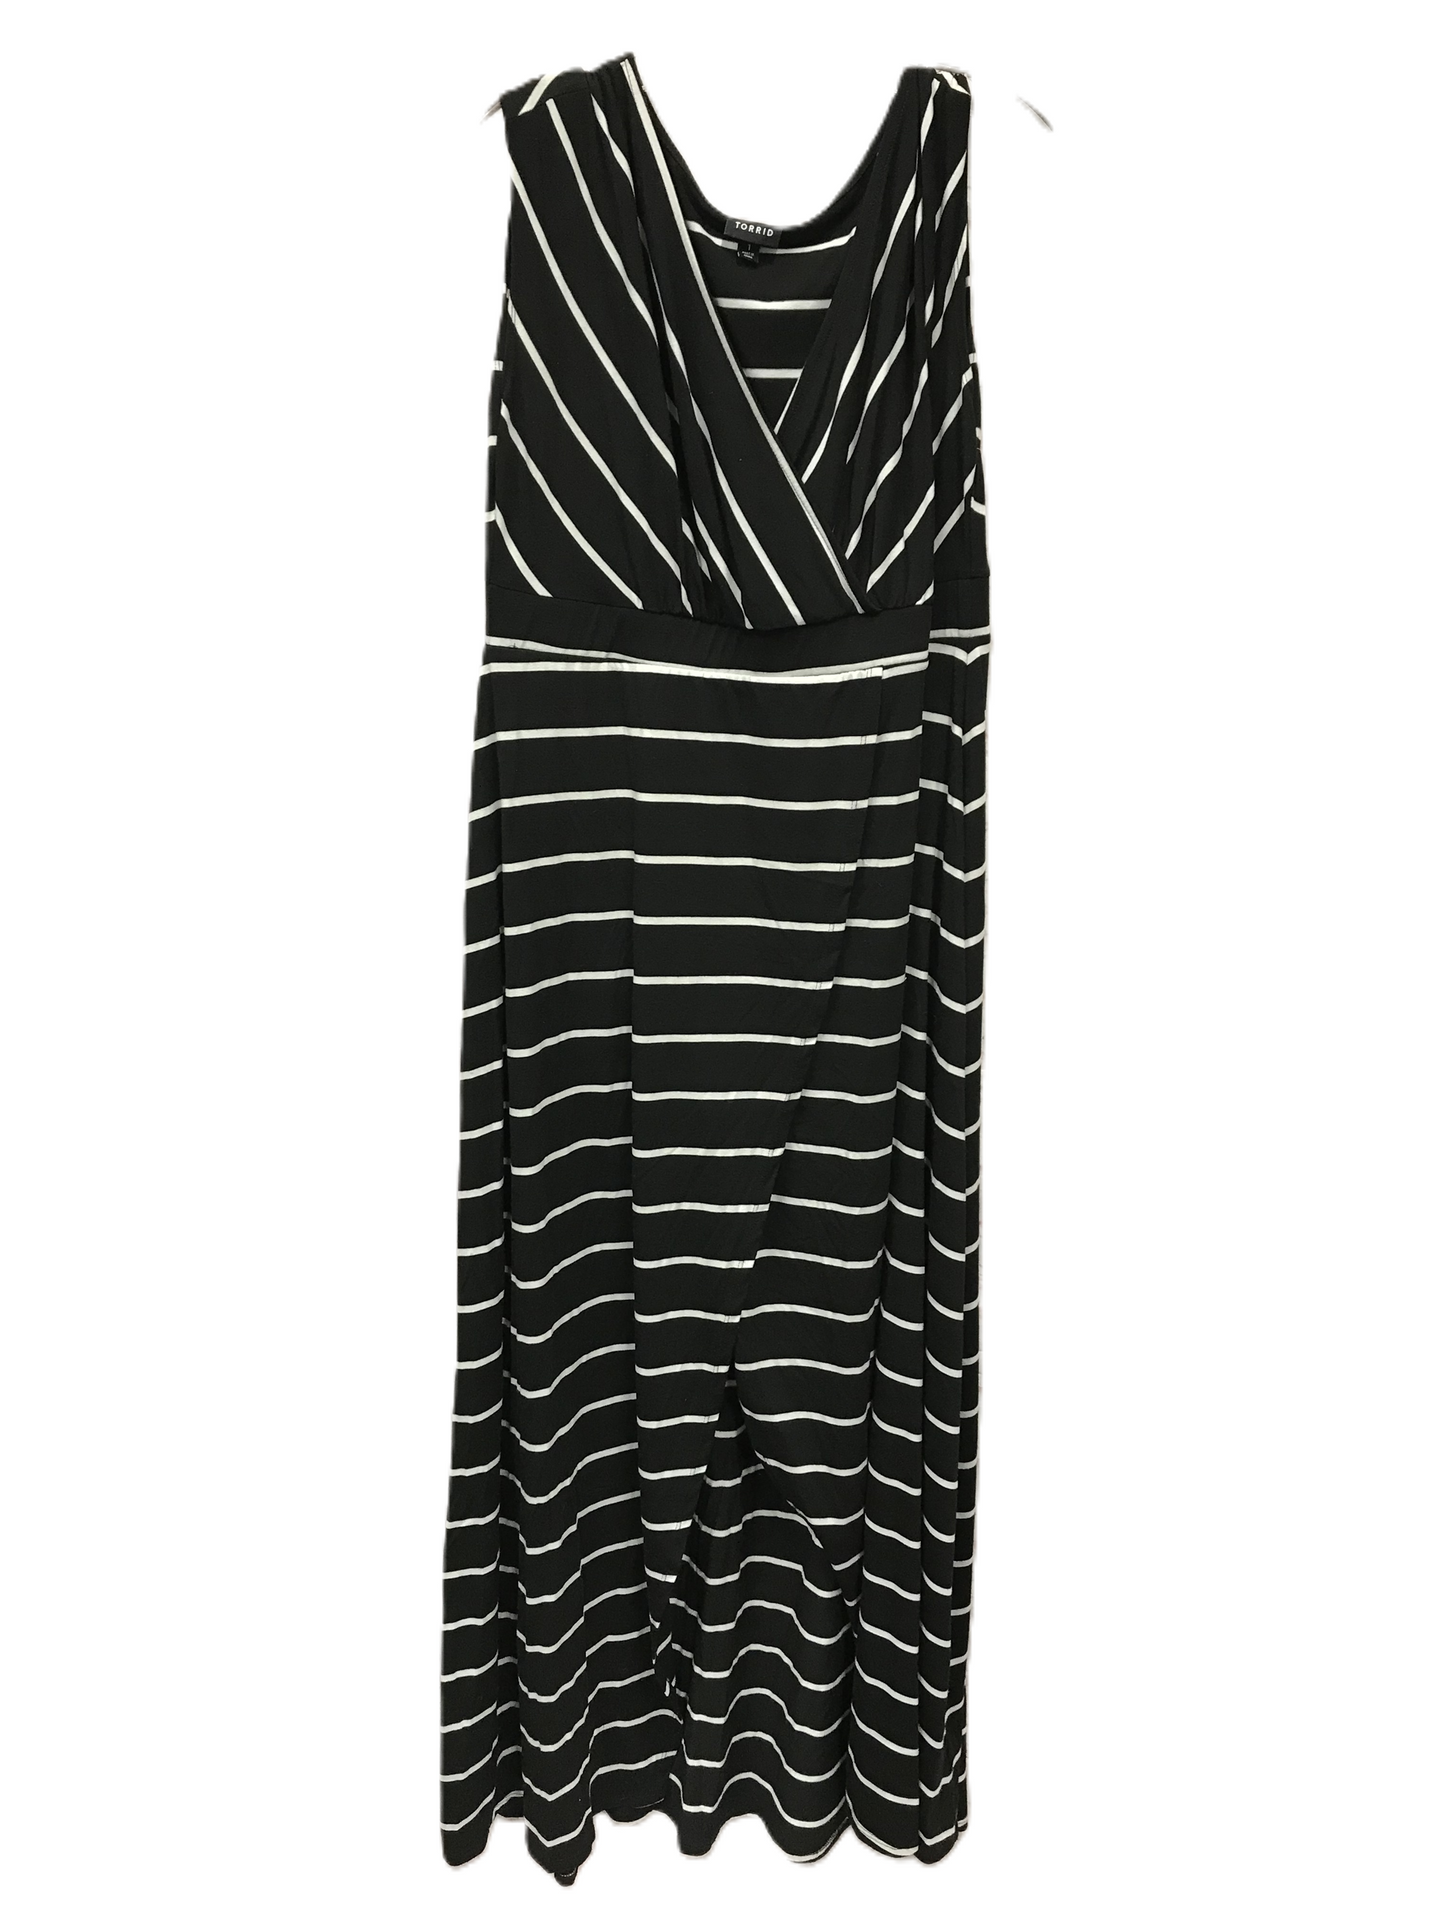 Black Dress Casual Maxi By Torrid, Size: 1x